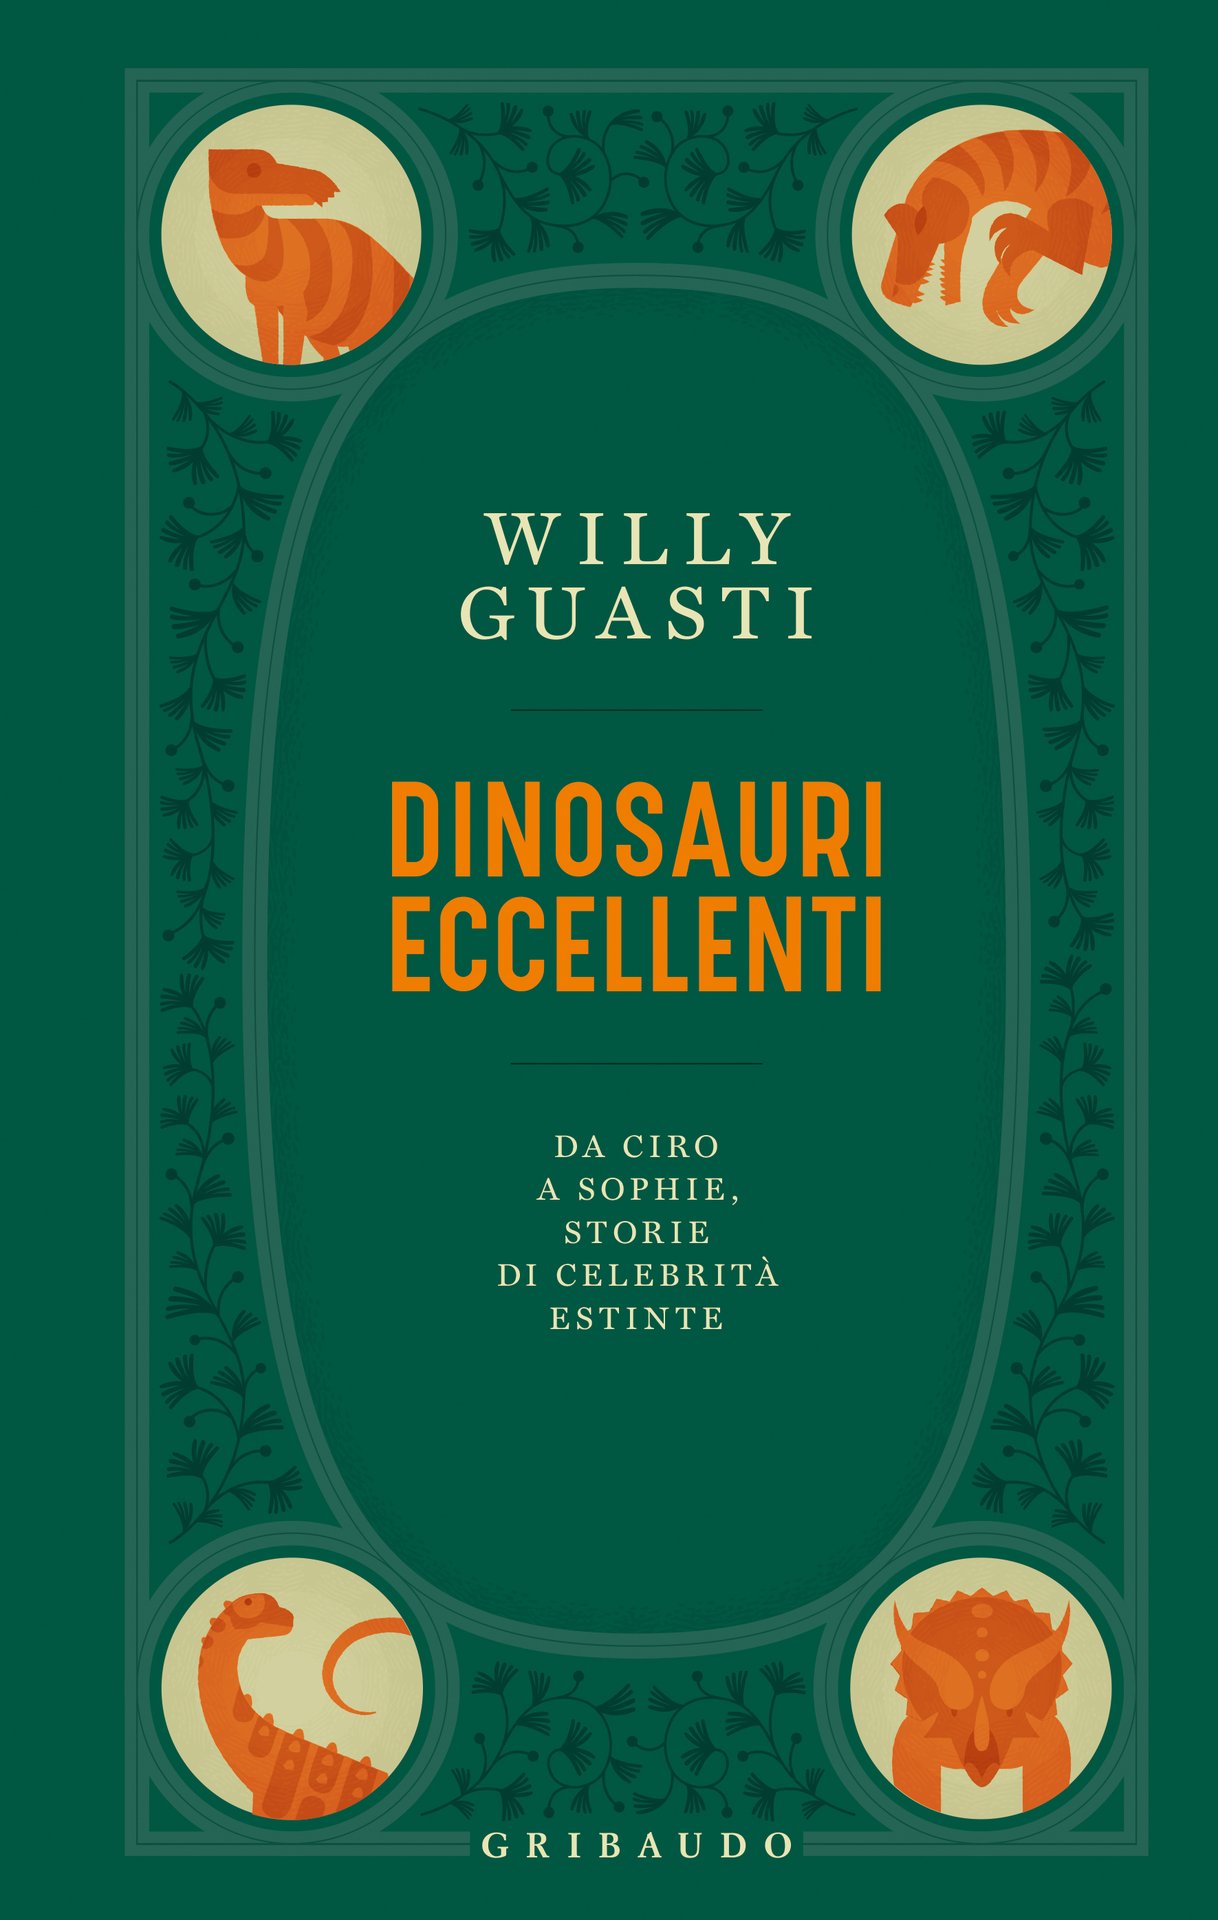 Willy Guasti presenta Dinosauri eccellenti a Firenze